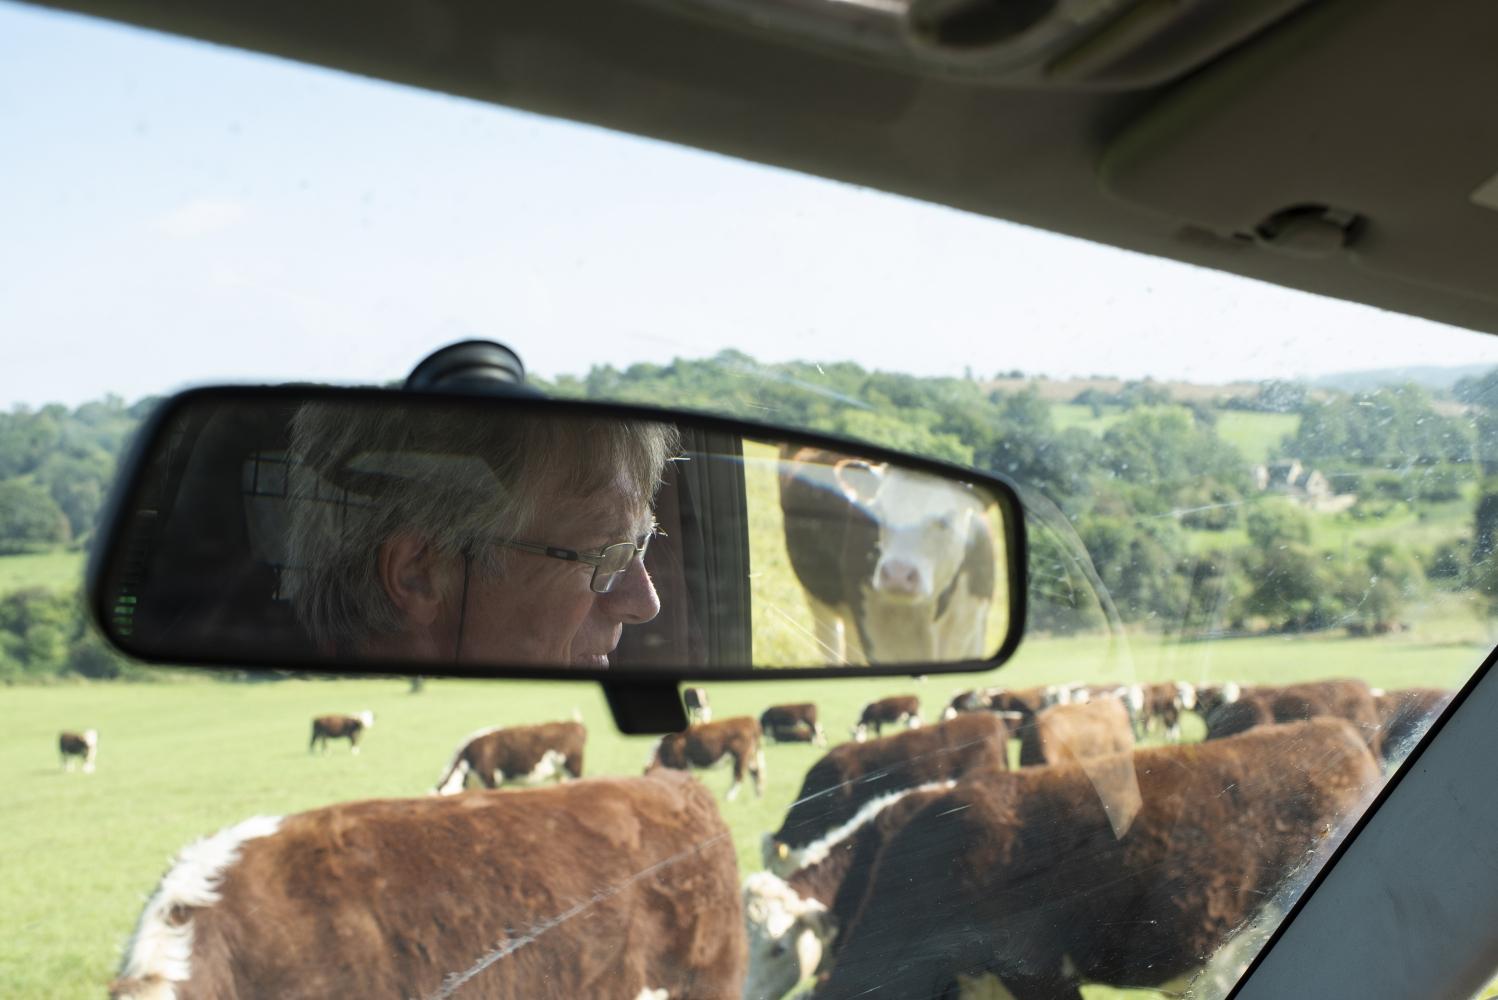 A view of cows in a field through a car windscreen